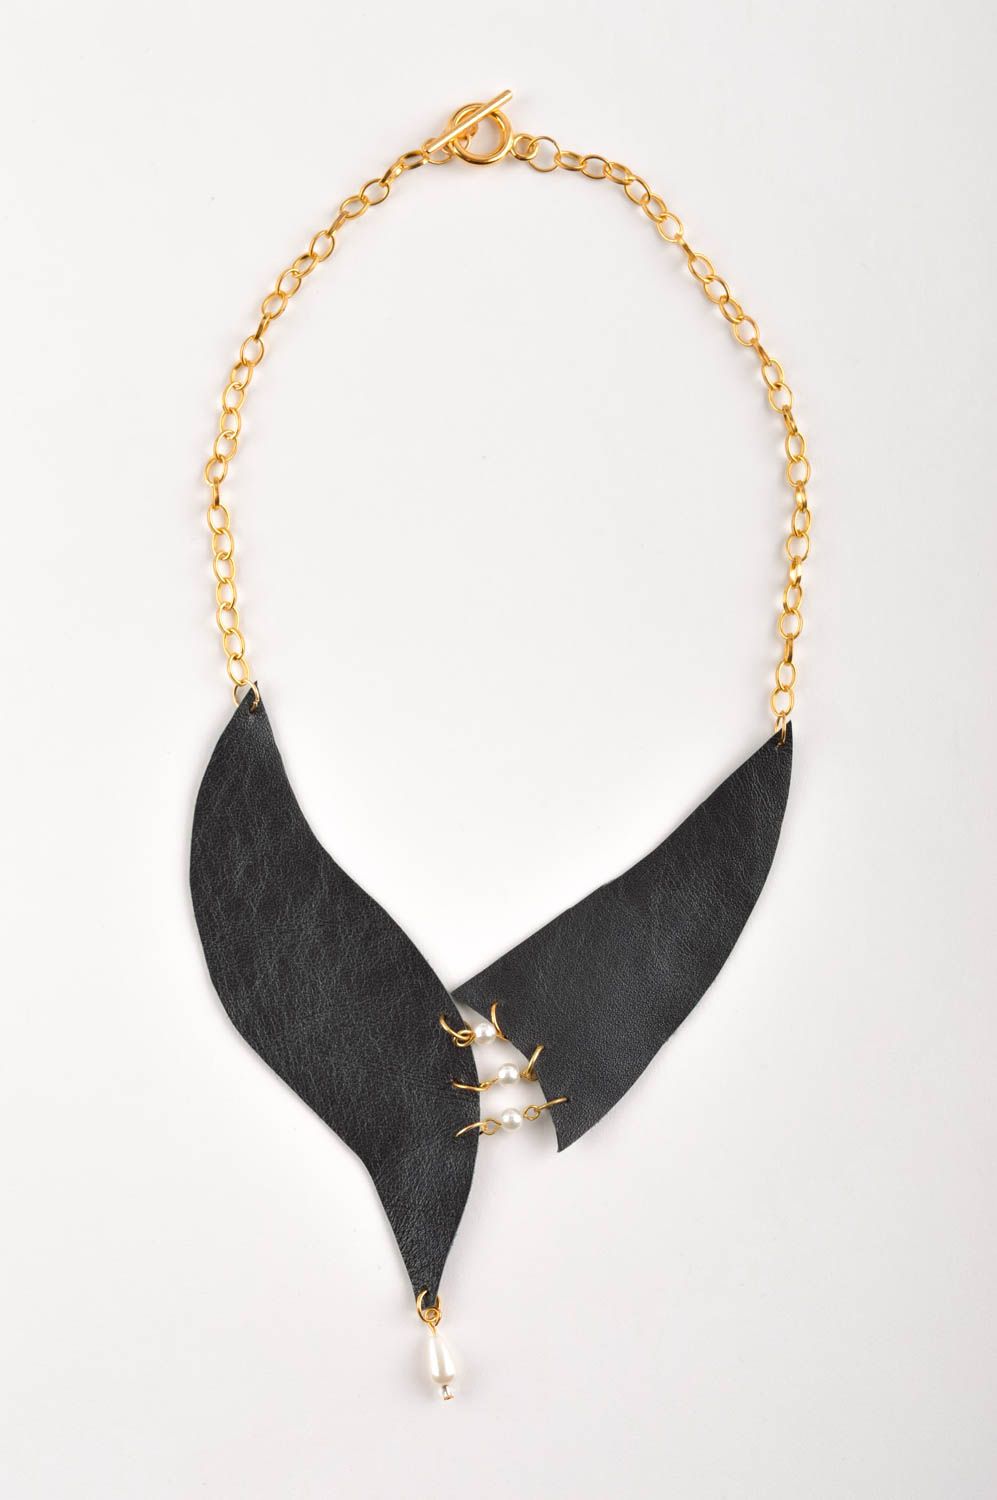 Handmade chain necklace stylish accessory designer jewelry present for women photo 2